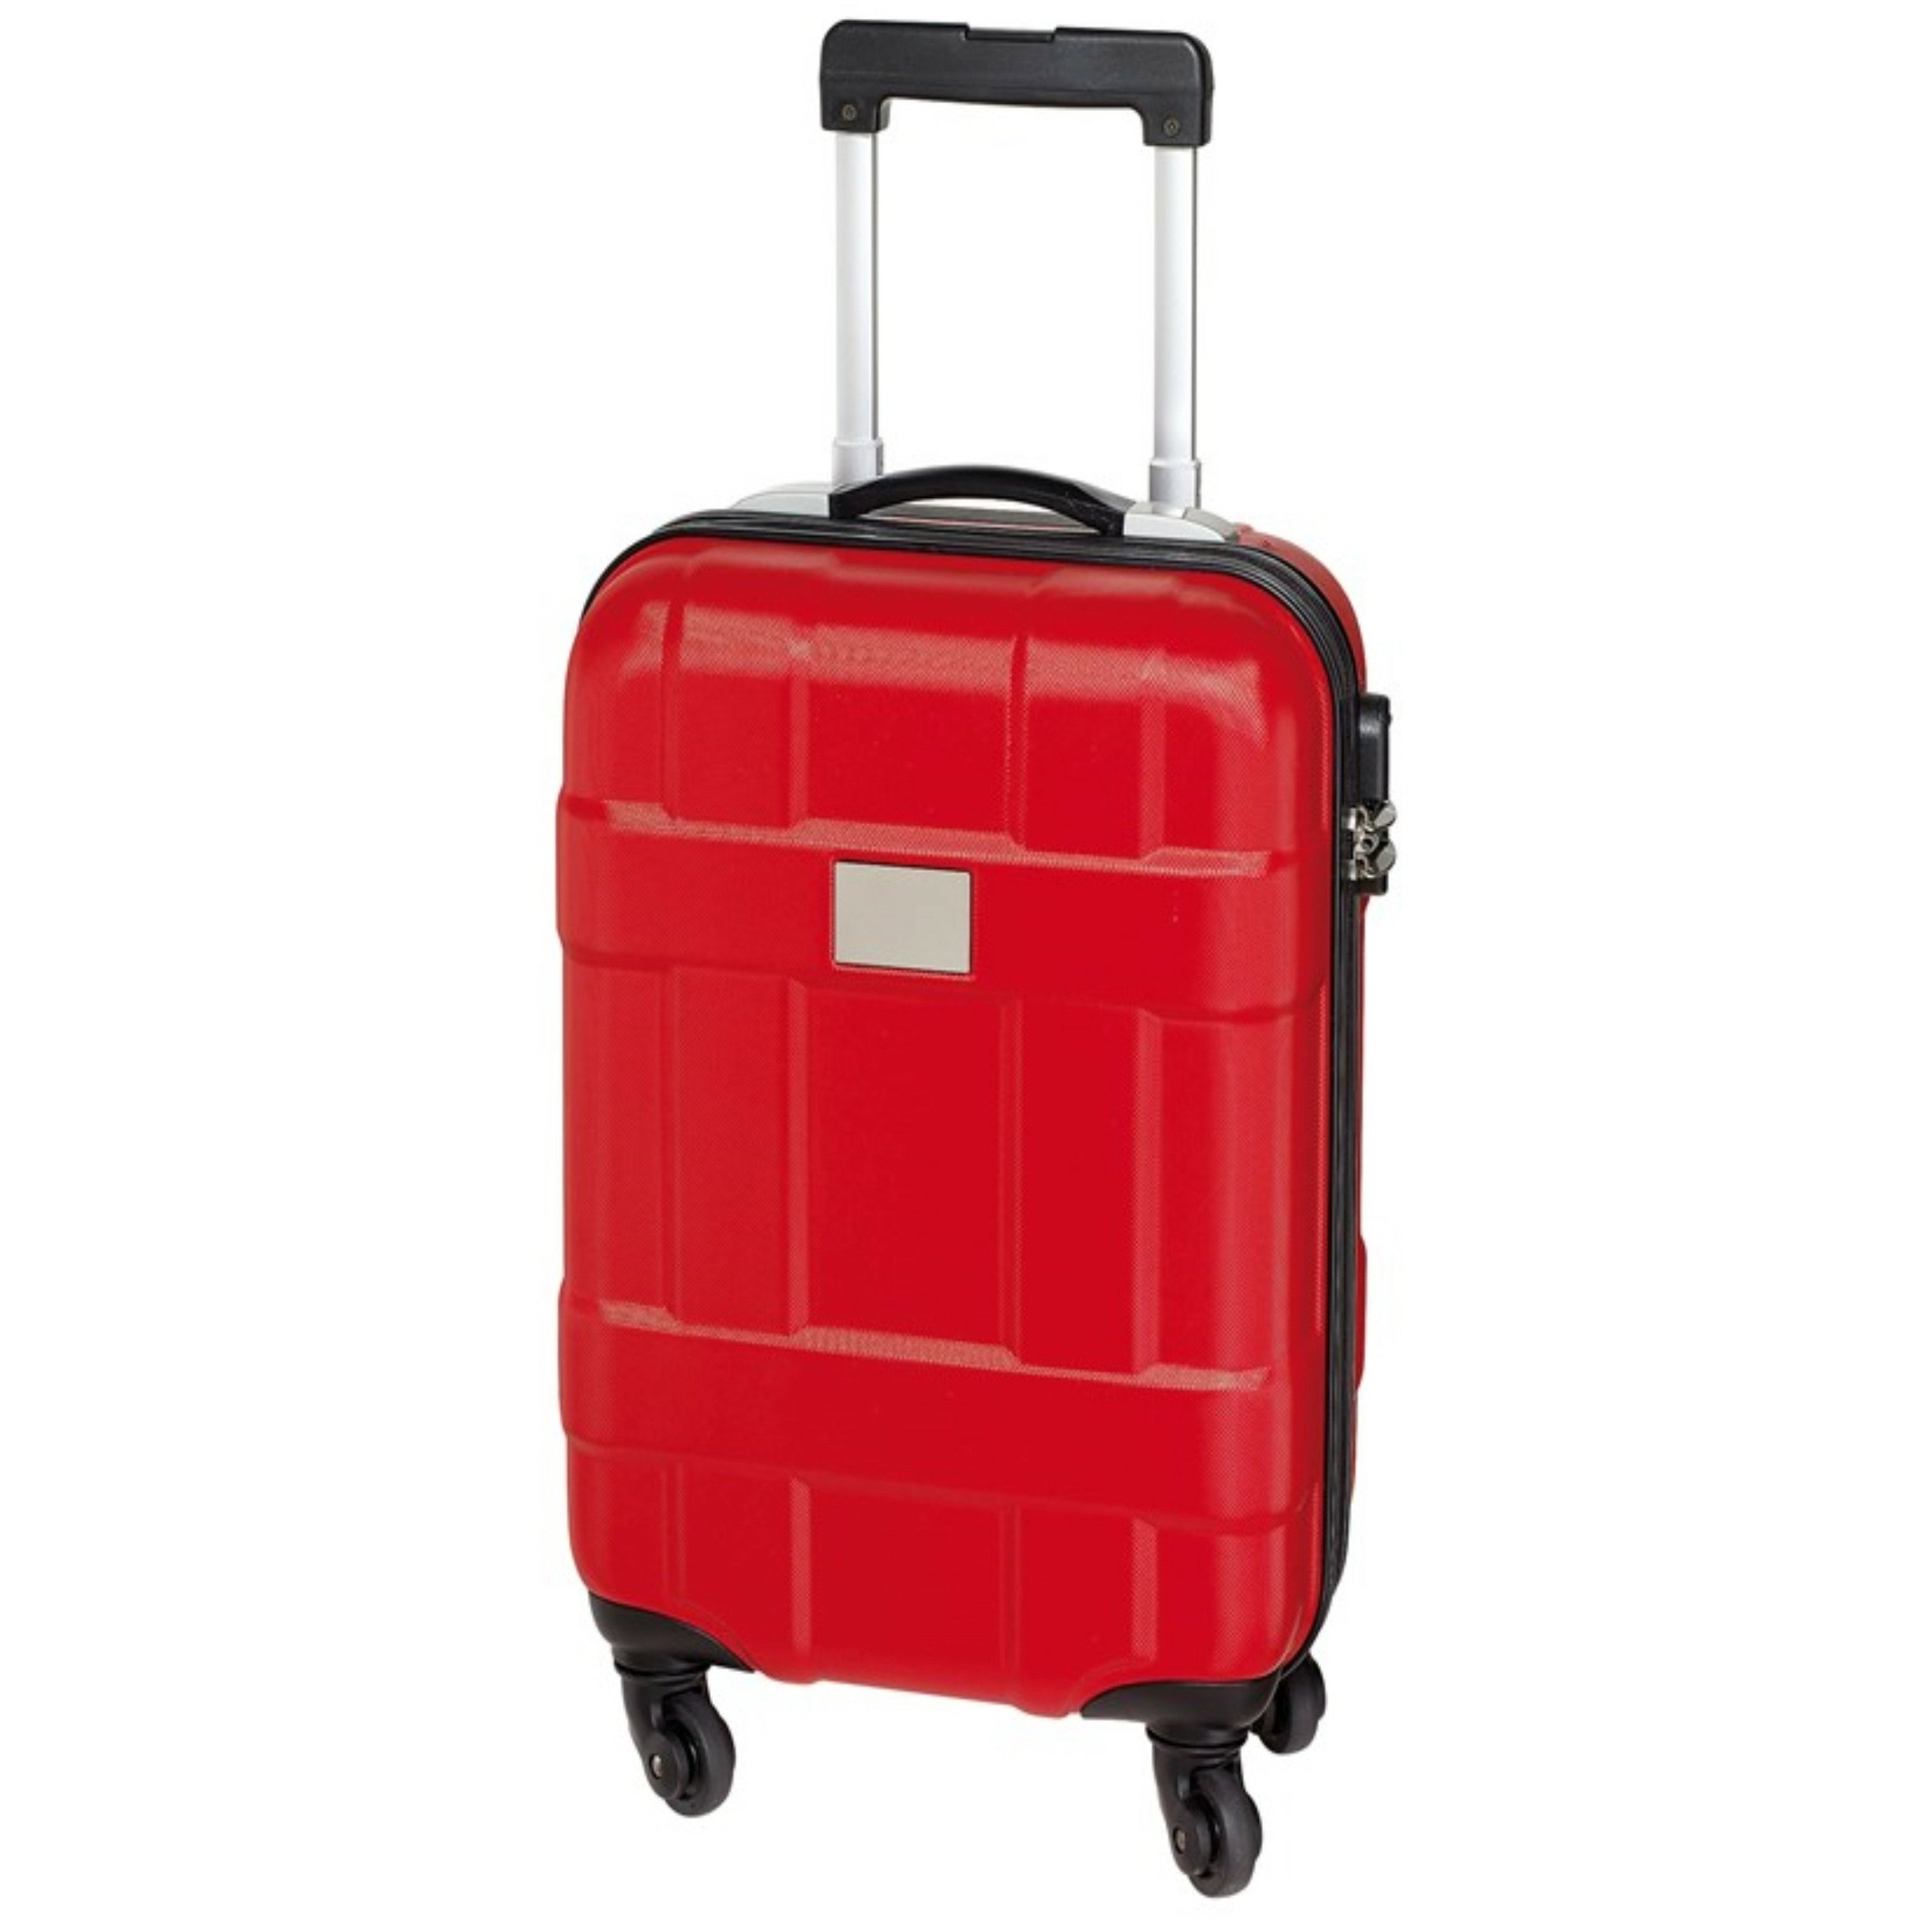 Cabine handbagage reis trolley koffer met zwenkwielen 55 x 35 x 20 cm rood